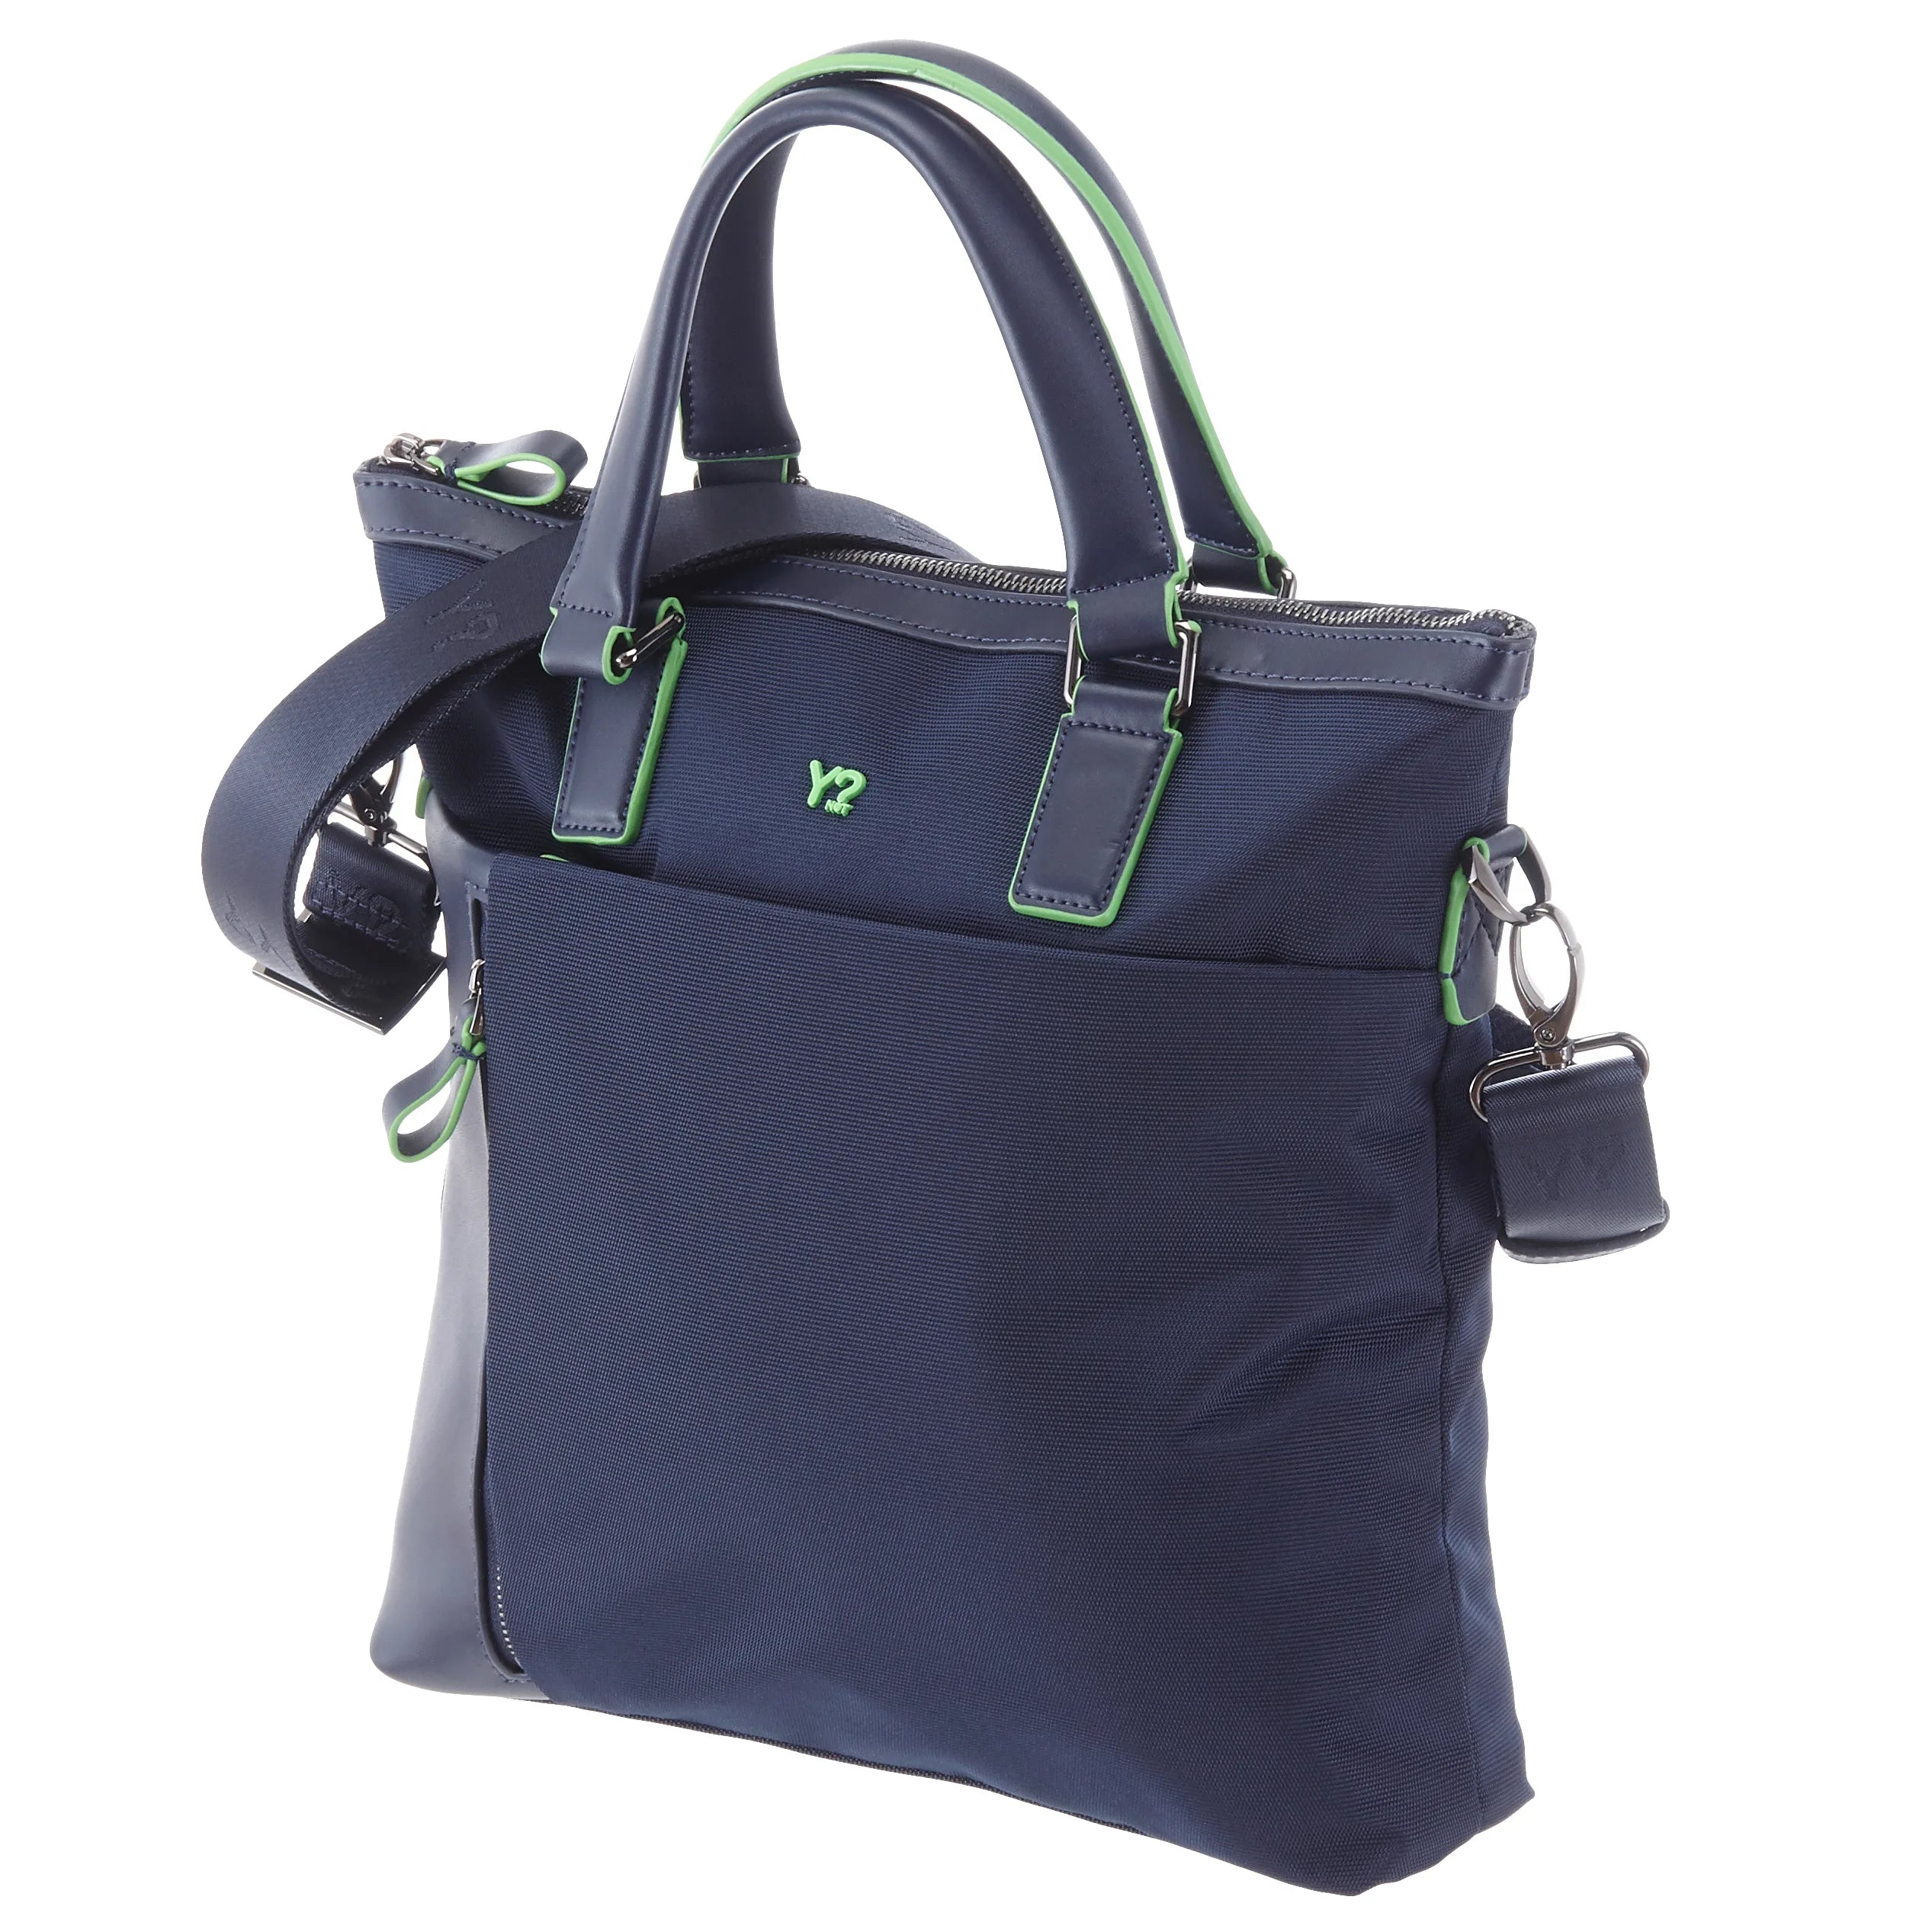 Y NOT? Business shoulder bag with laptop compartment 33 cm - blue navy